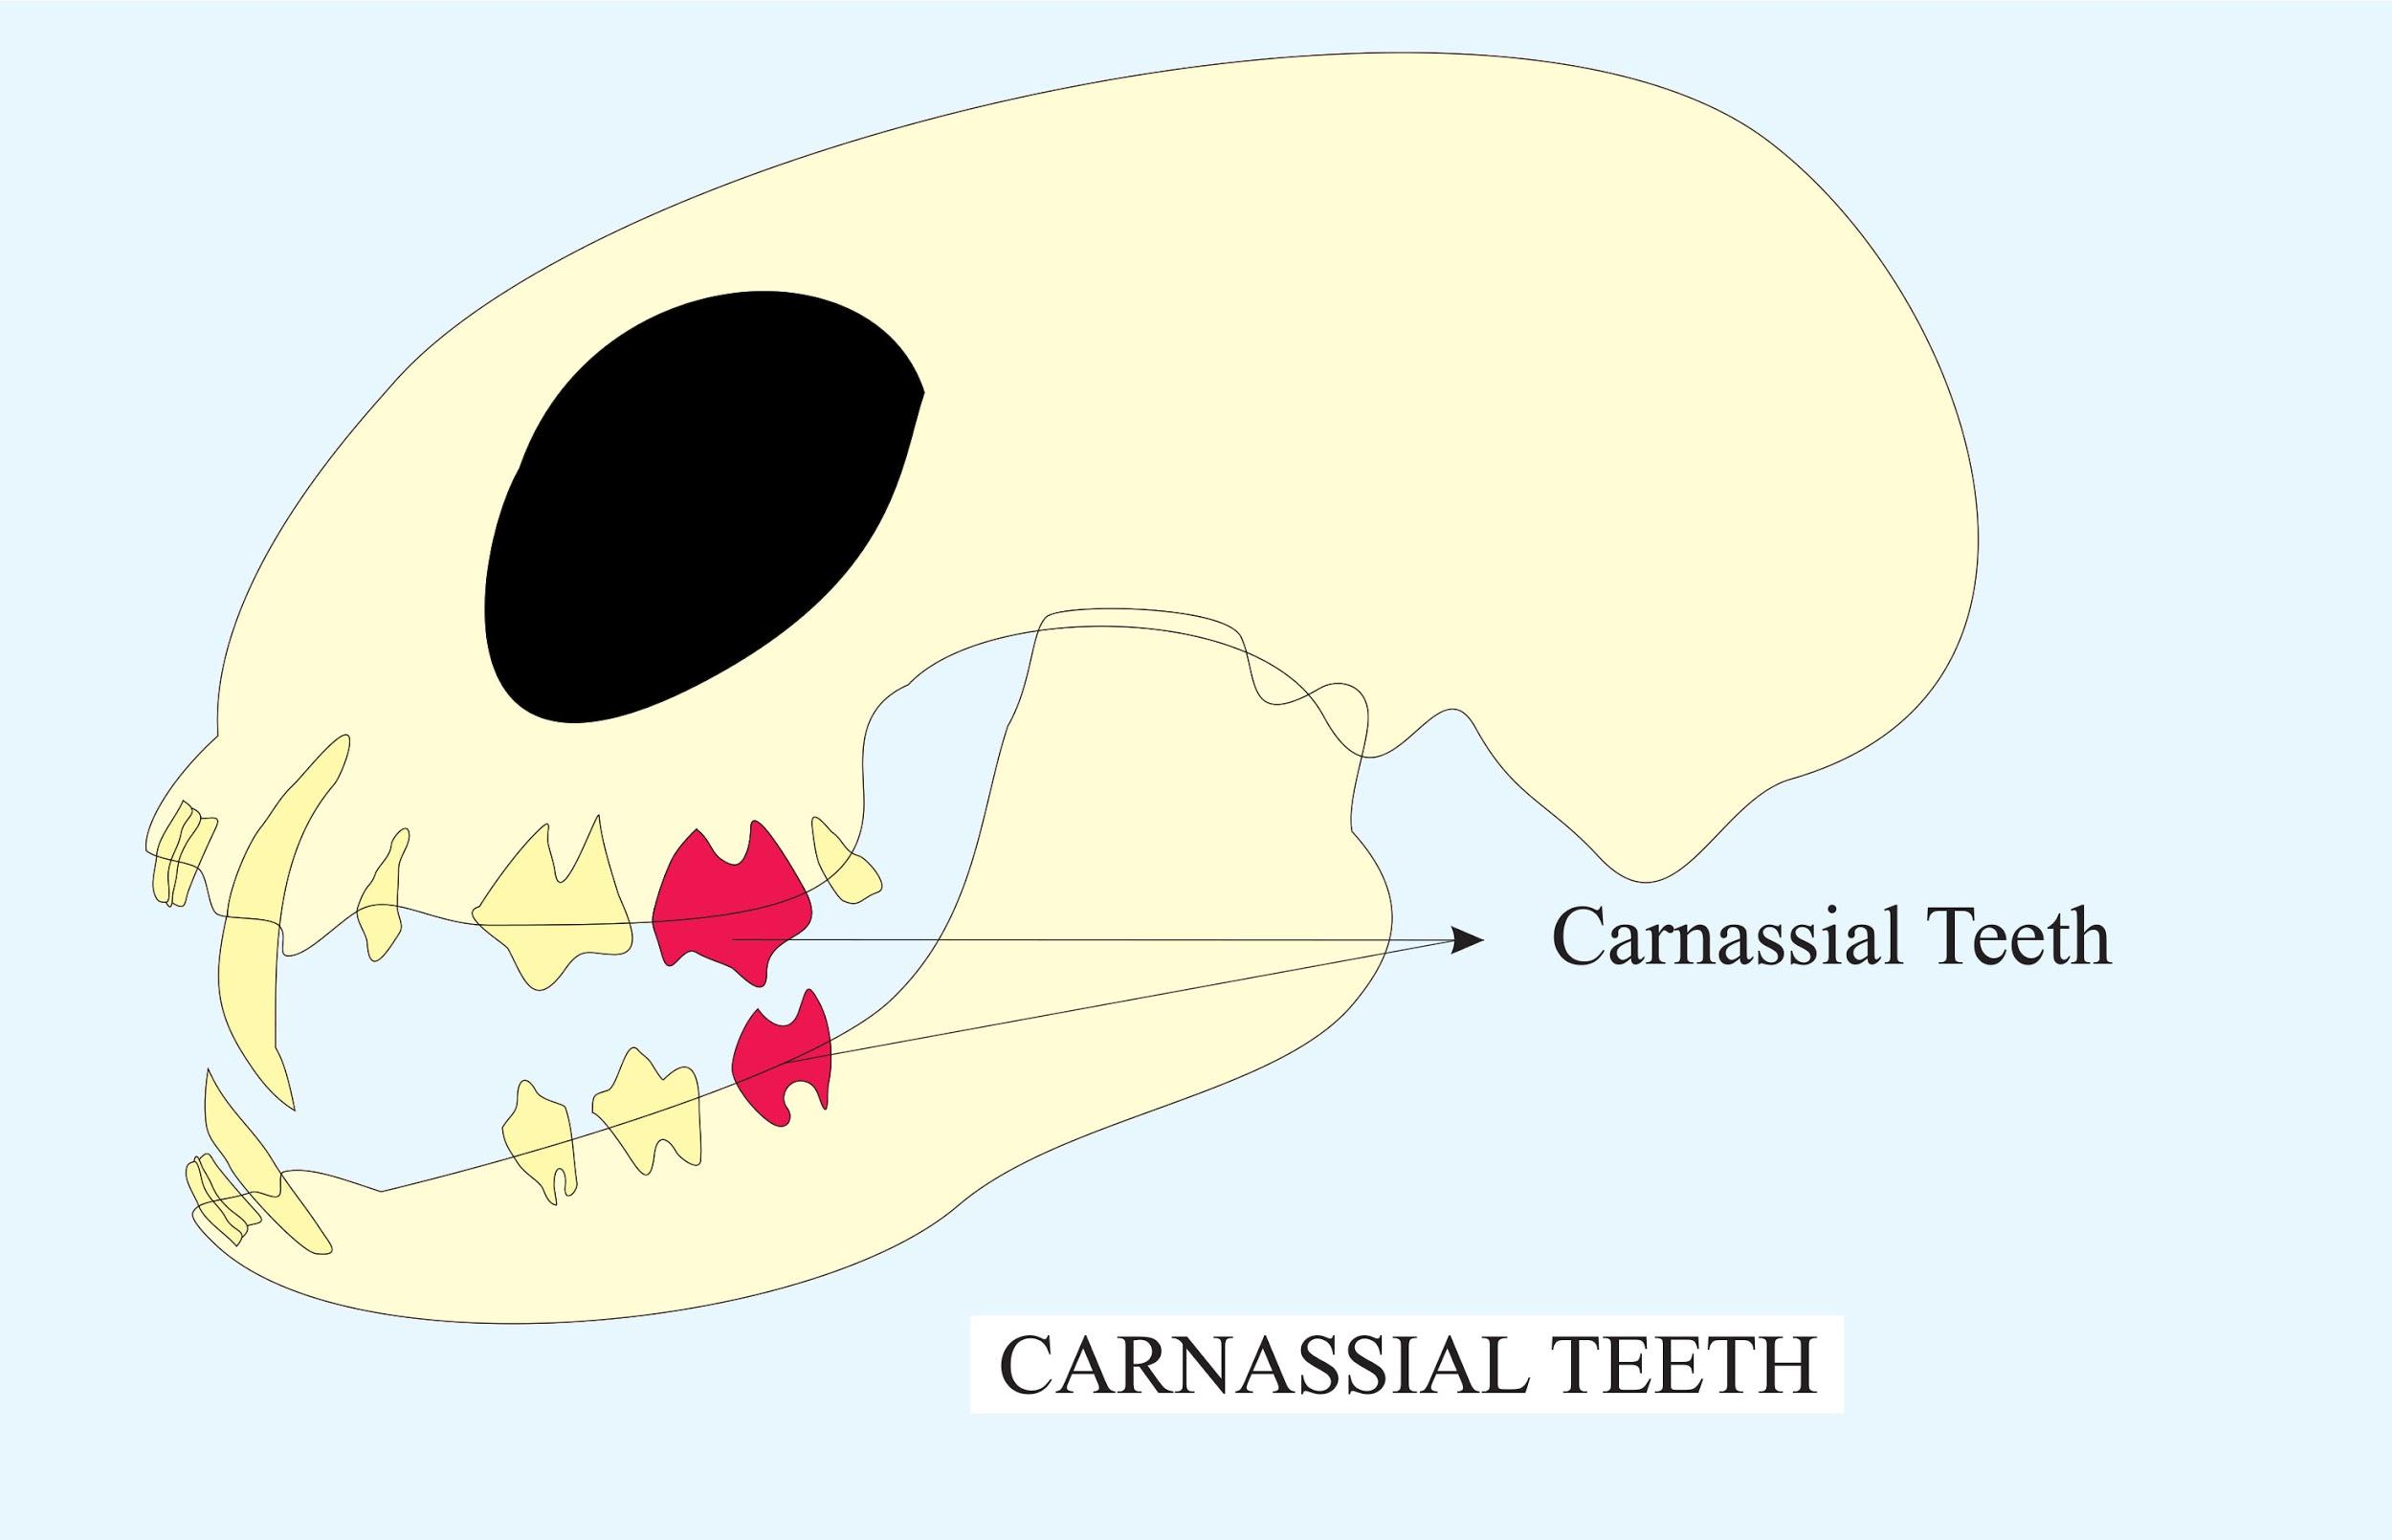 Carnassial teeth are modified forA)CrushingB)GrindingC)TearingD)Cutting